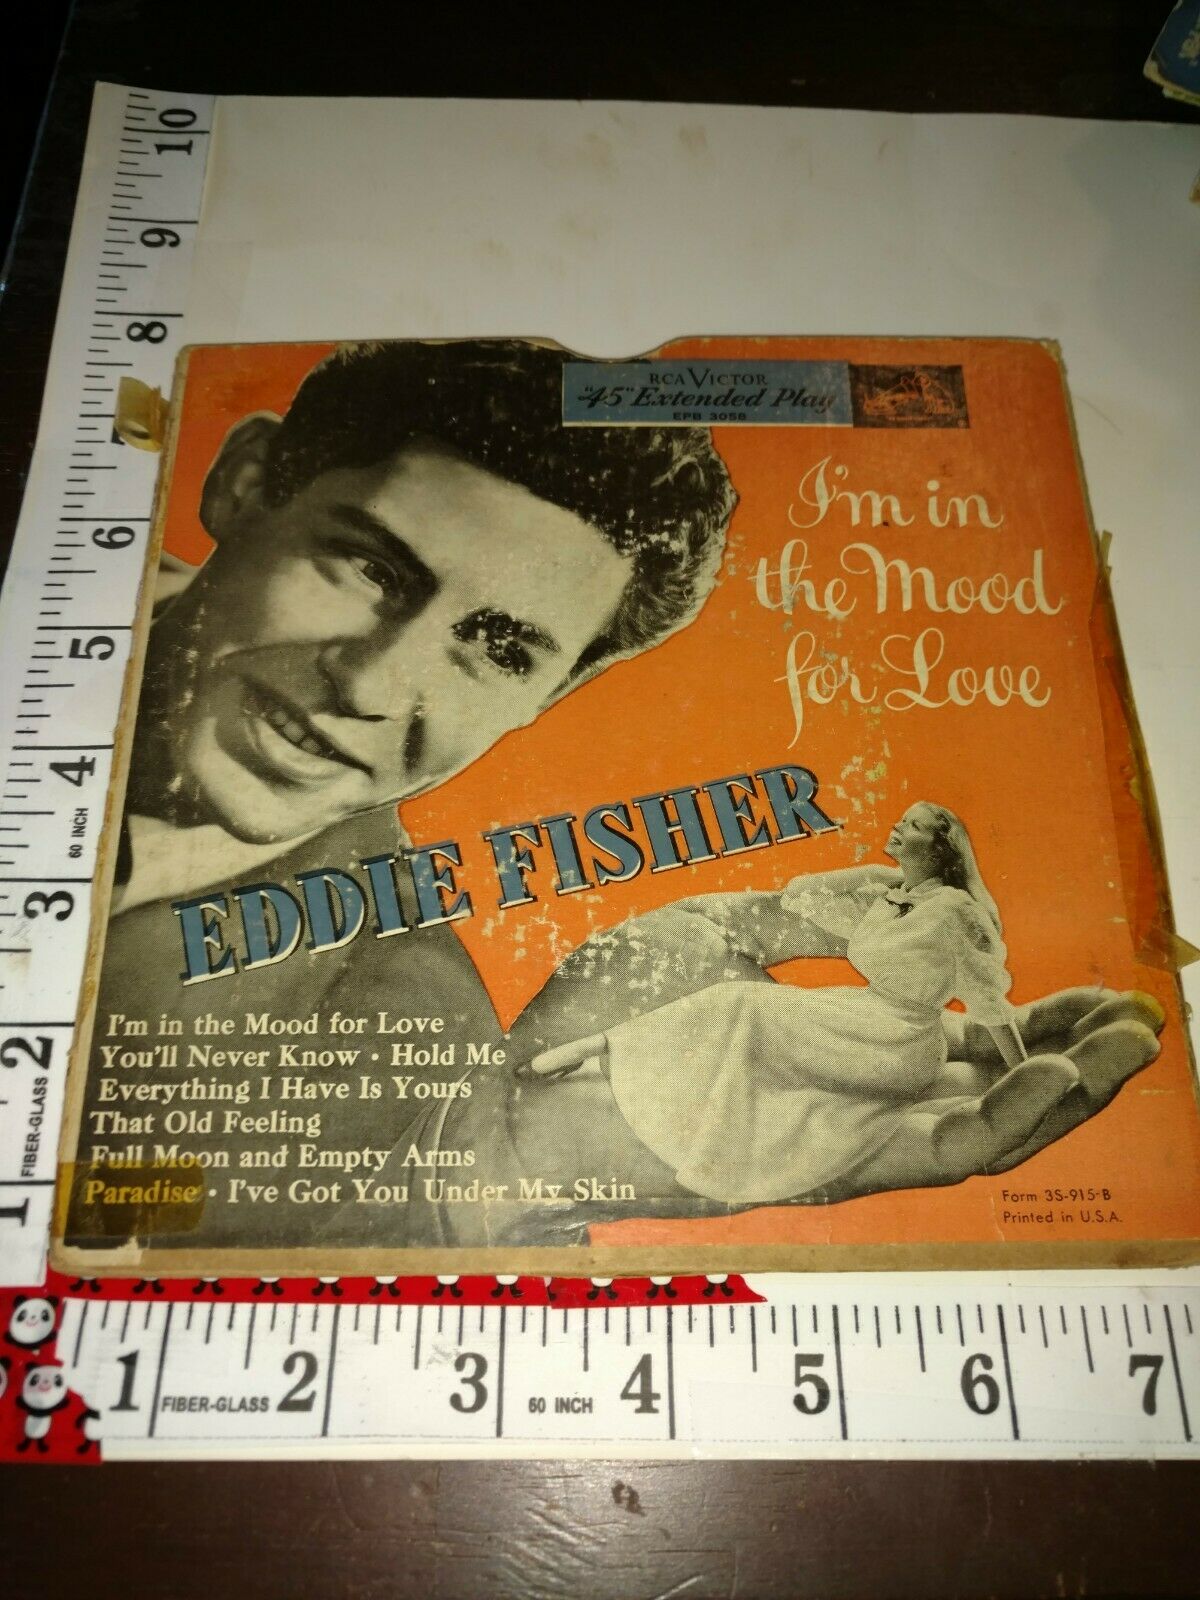 vintage records, Eddie Fisher, to records, cardboard sleeve